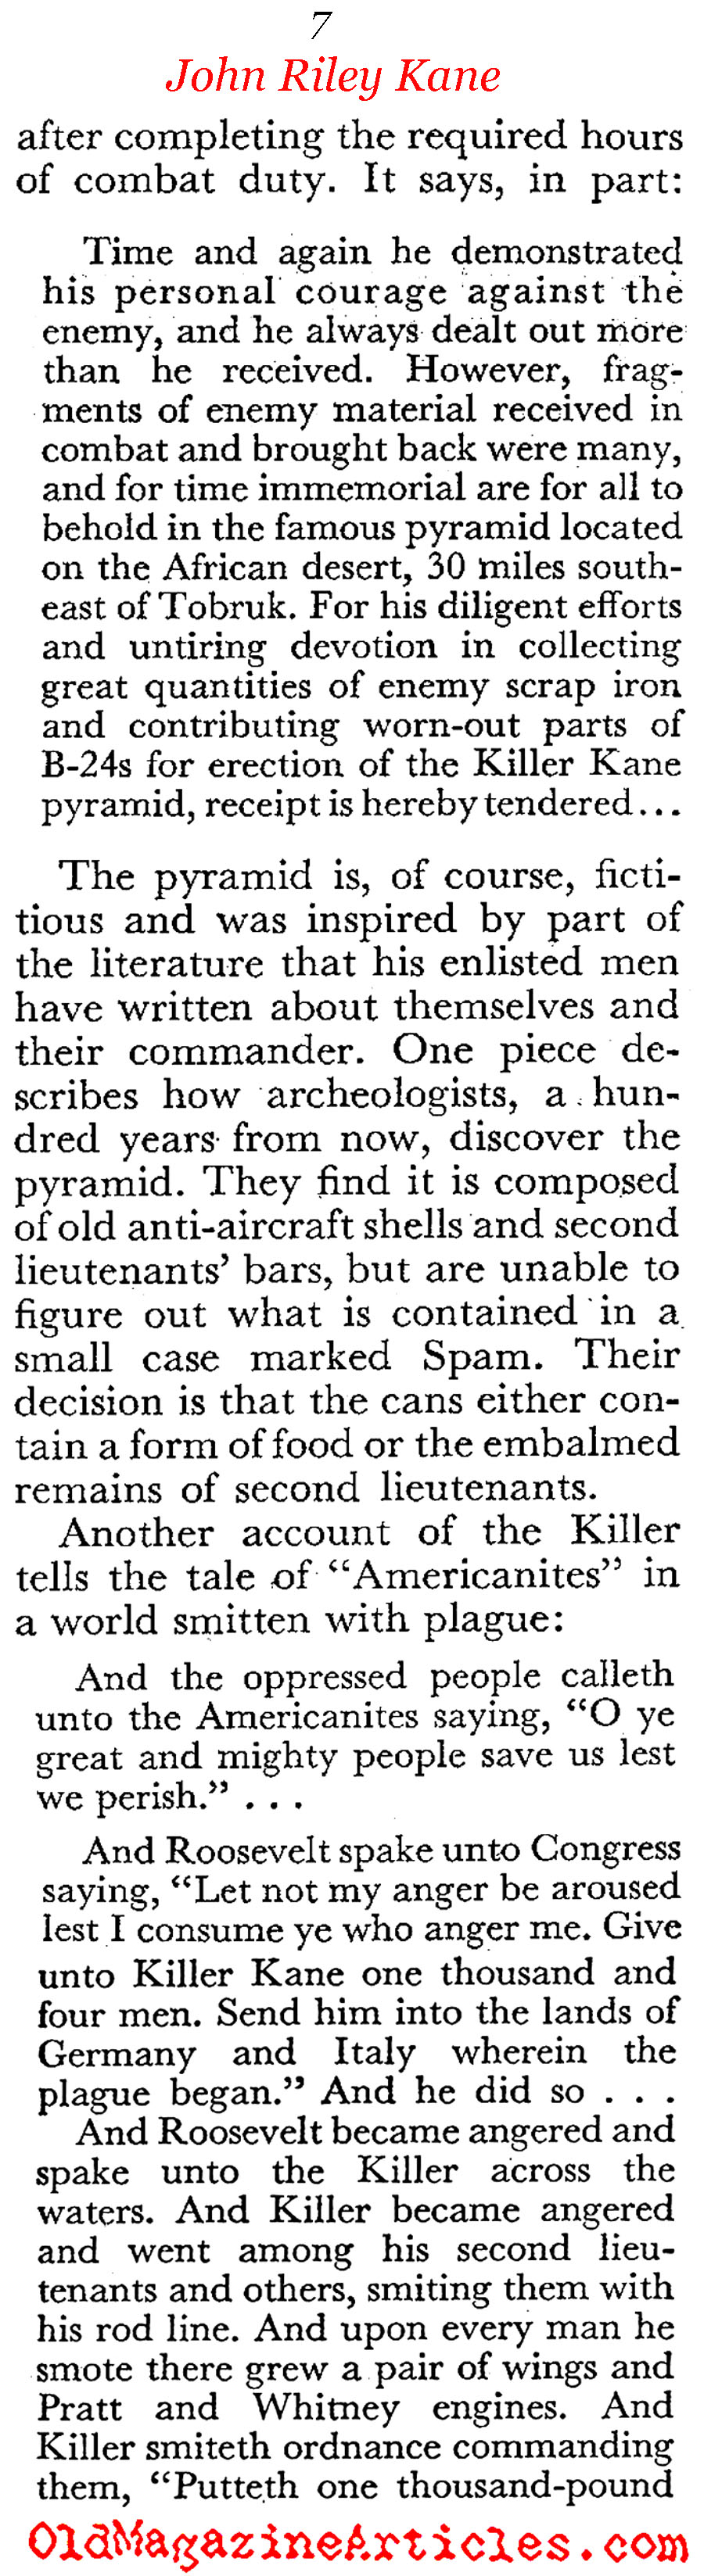 John Riley Kane (Coronet Magazine, 1944)